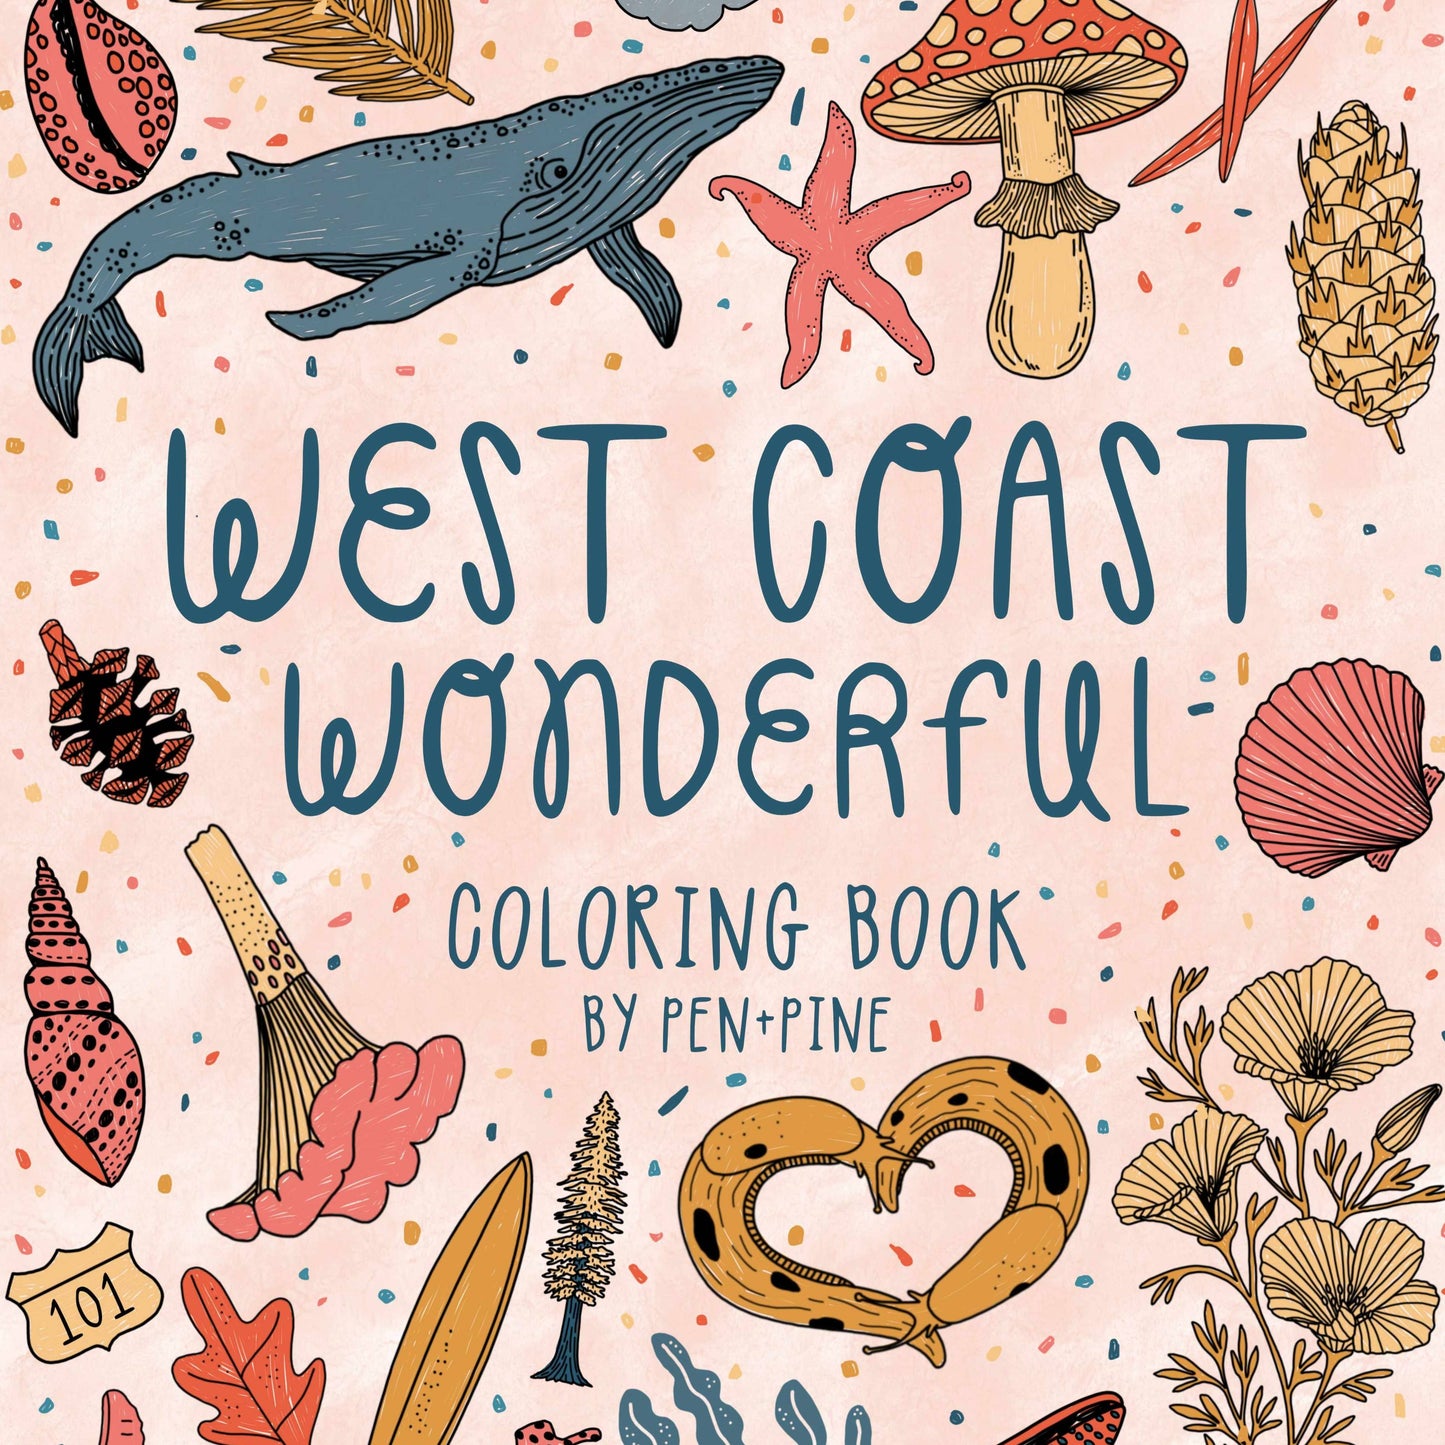 West Coast Wonderful Coloring Book